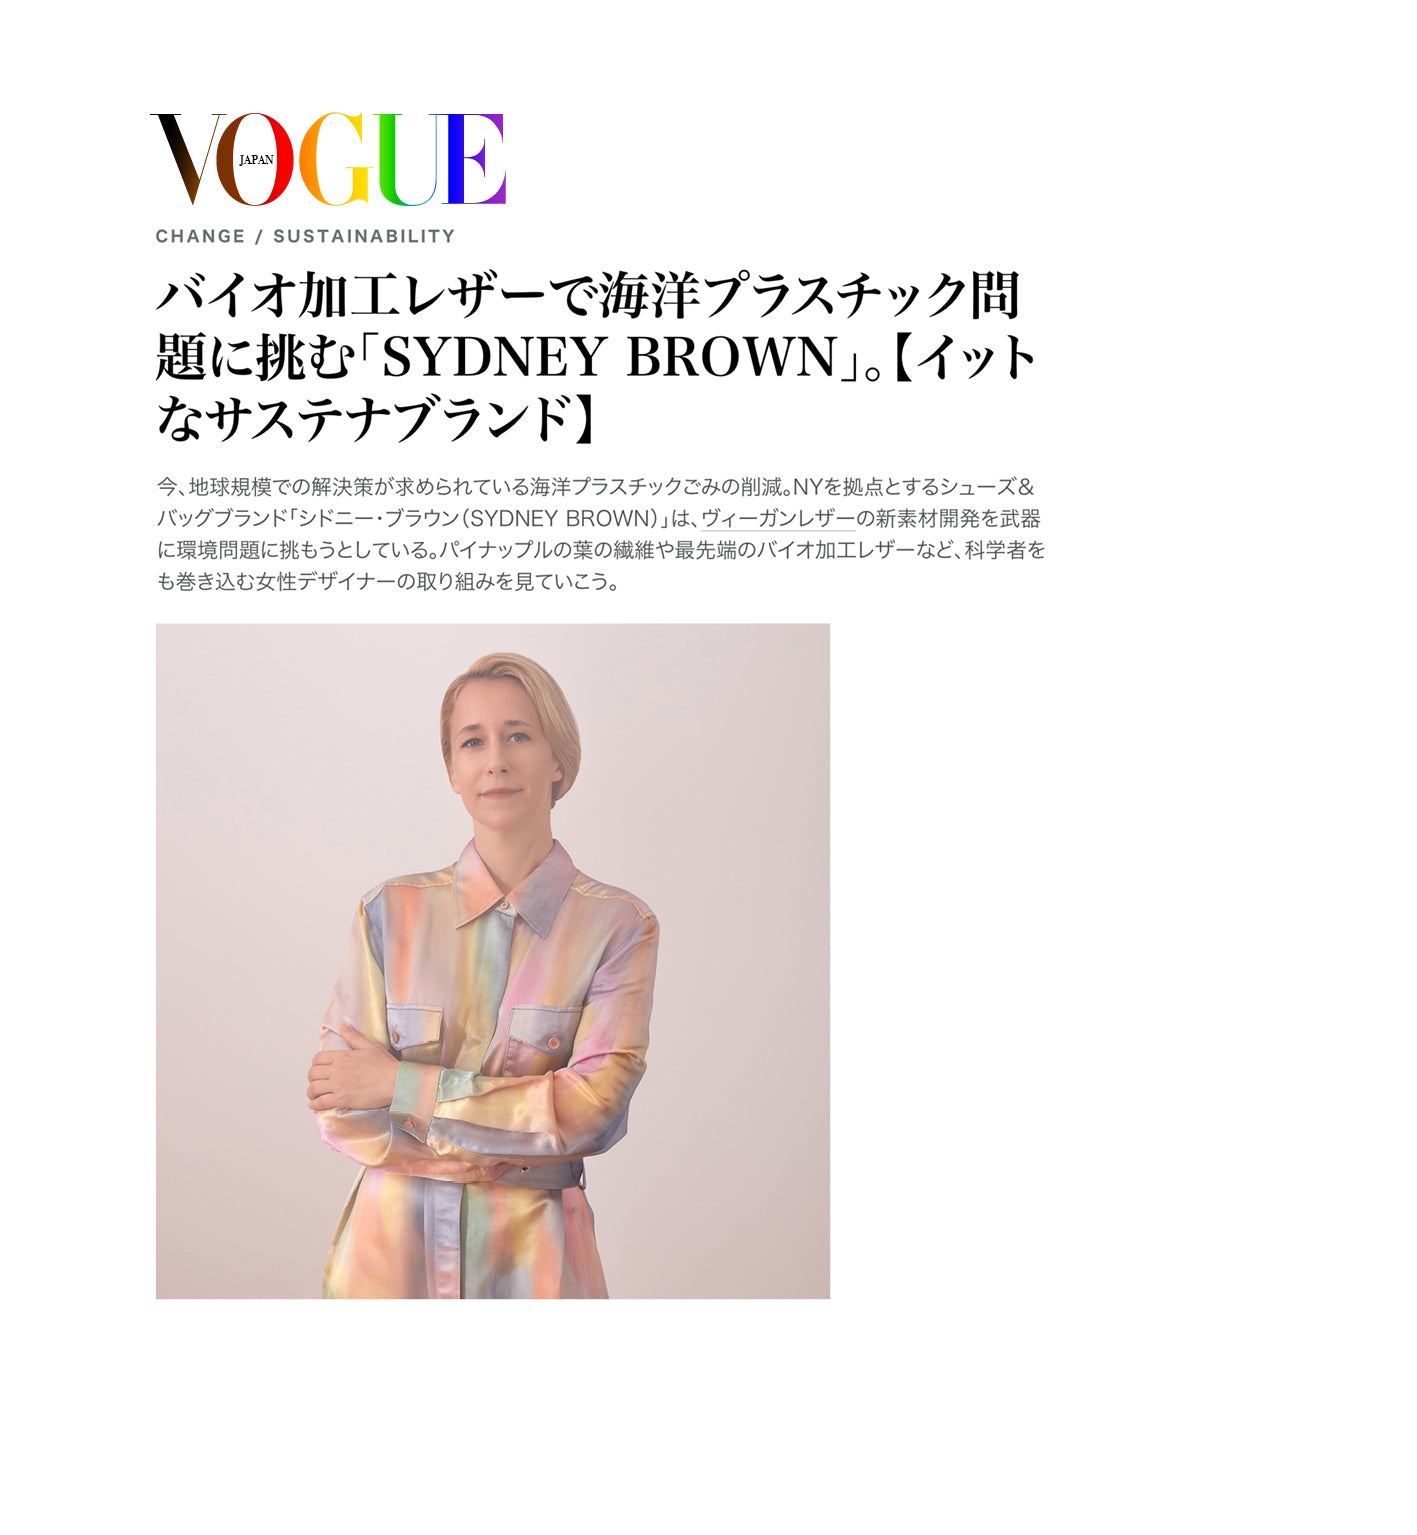 Vogue Japan x Sydney Brown